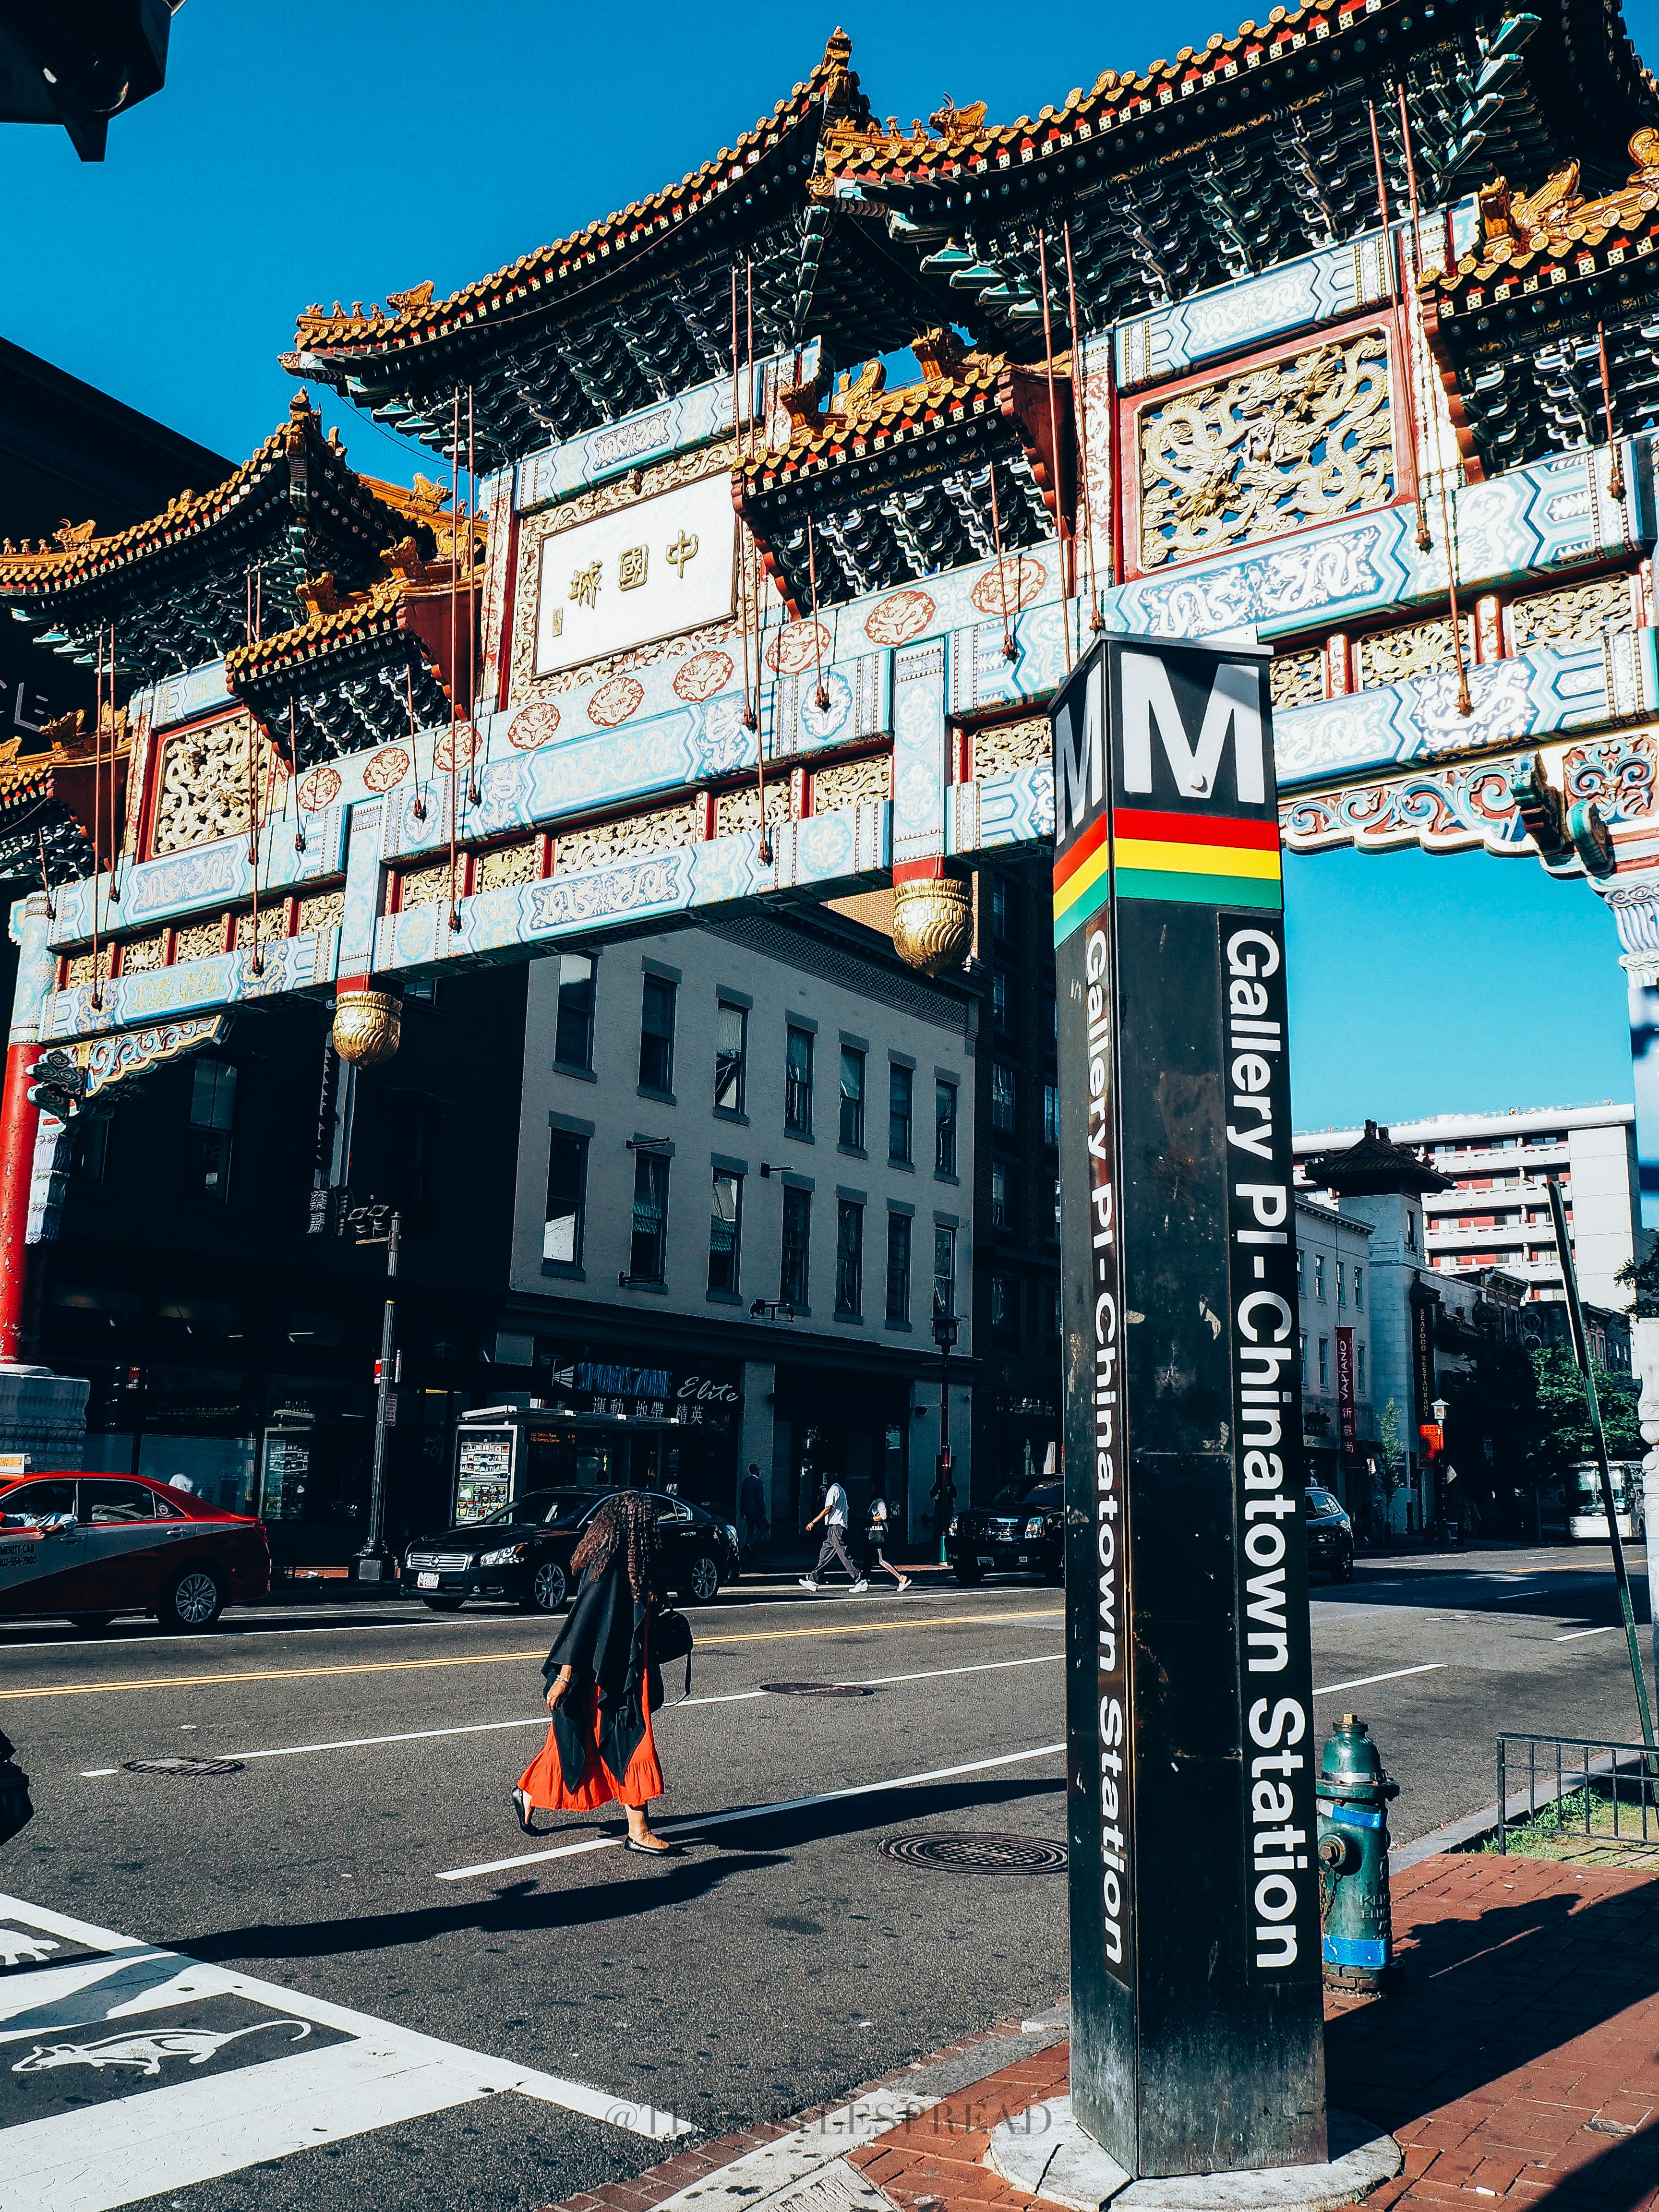 Chinatown Archway